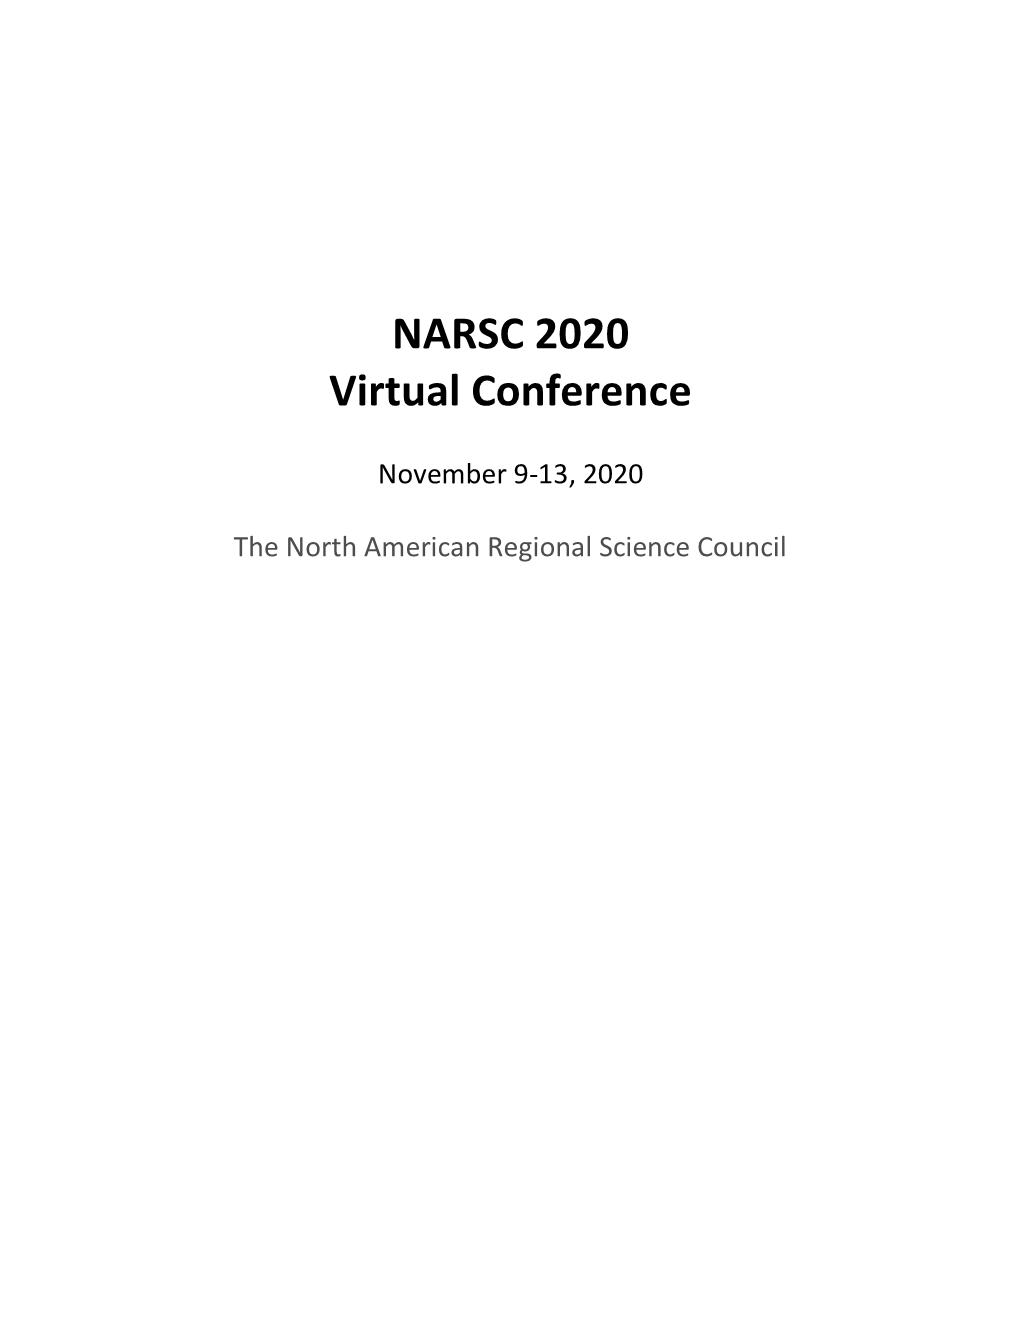 NARSC 2020 Virtual Conference